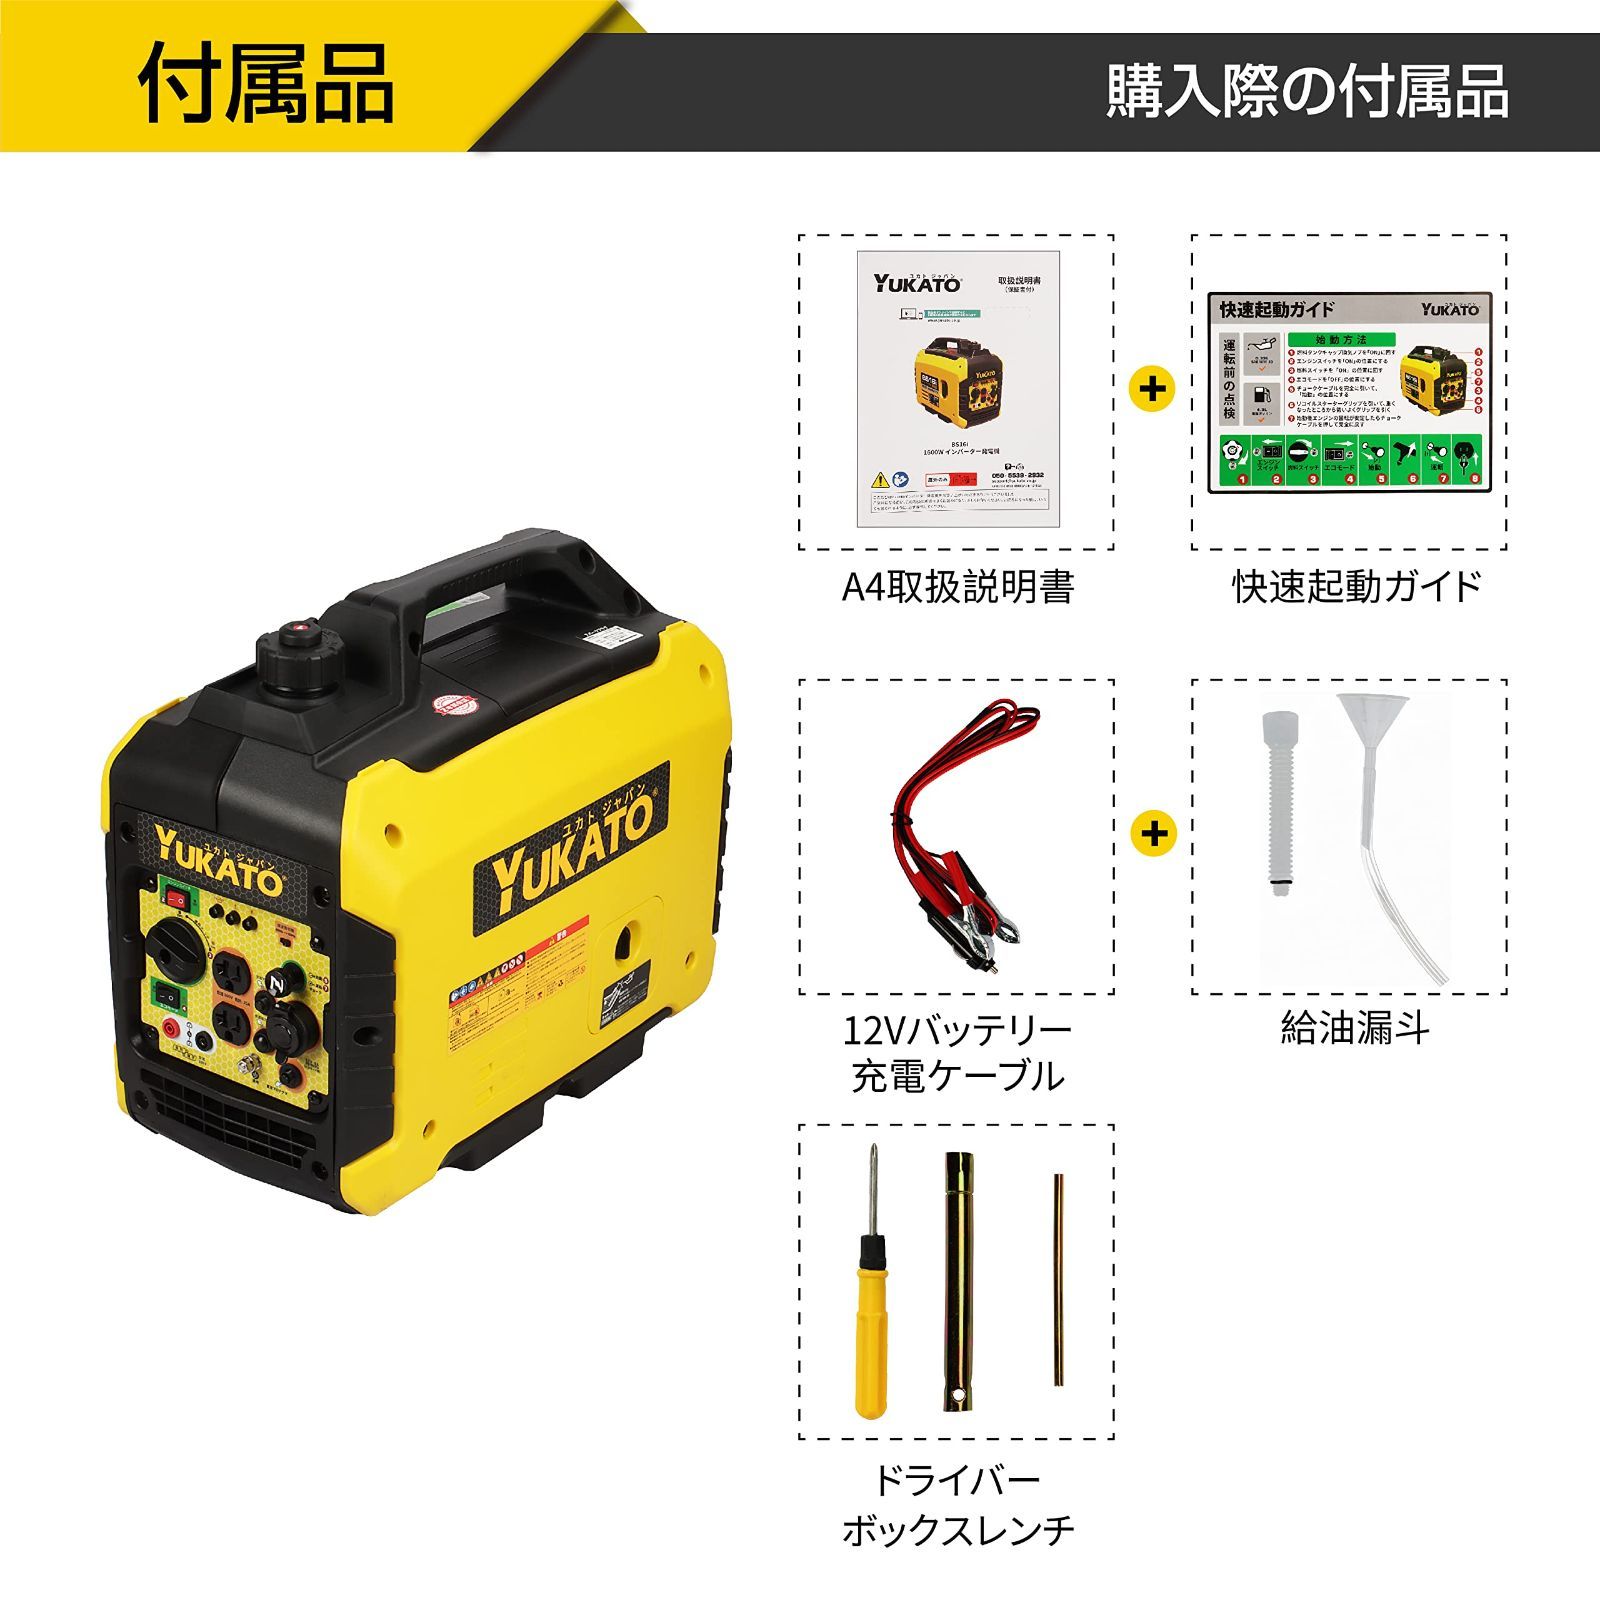 YUKATO インバーター発電機 定格出力3.0kVA 50Hz 60Hz切替 過負荷保護